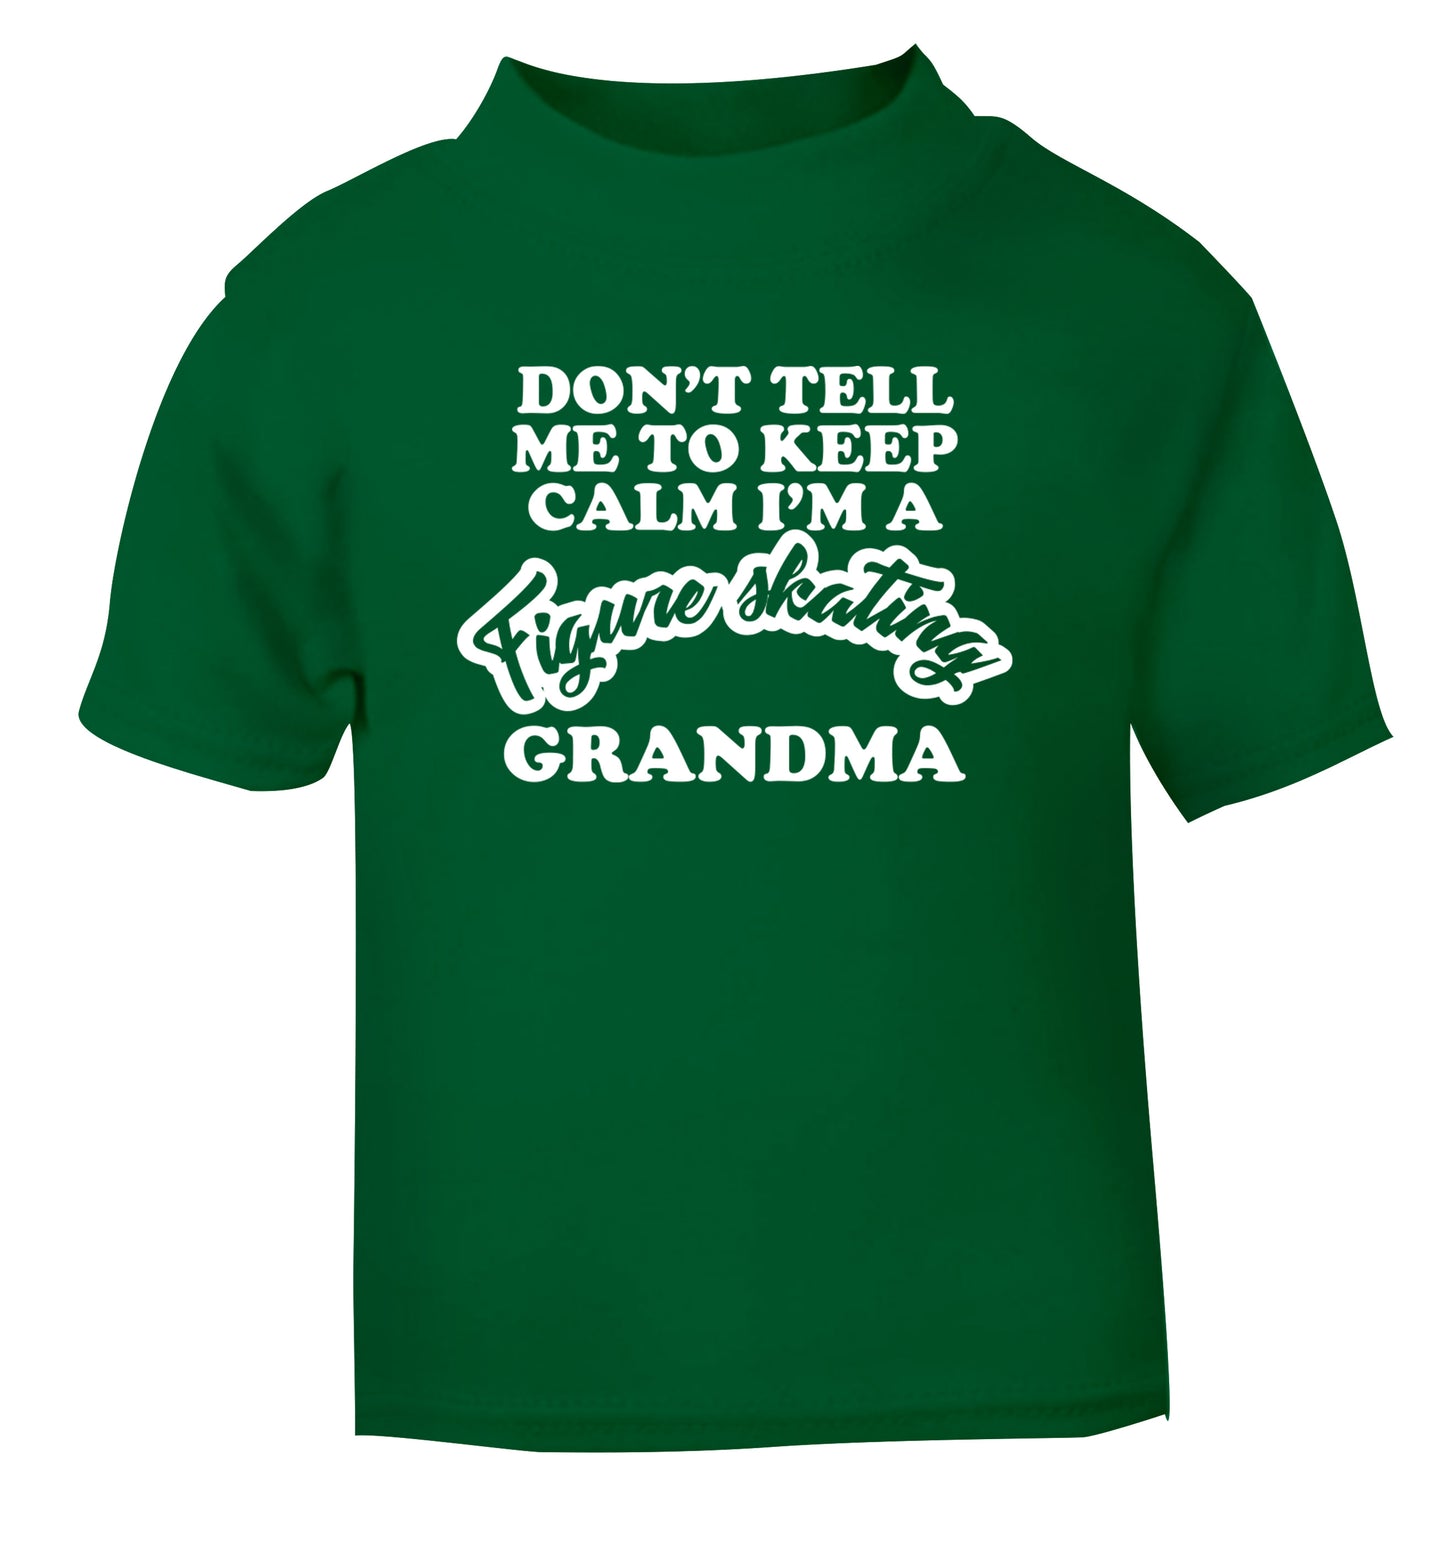 Don't tell me to keep calm I'm a figure skating grandma green Baby Toddler Tshirt 2 Years